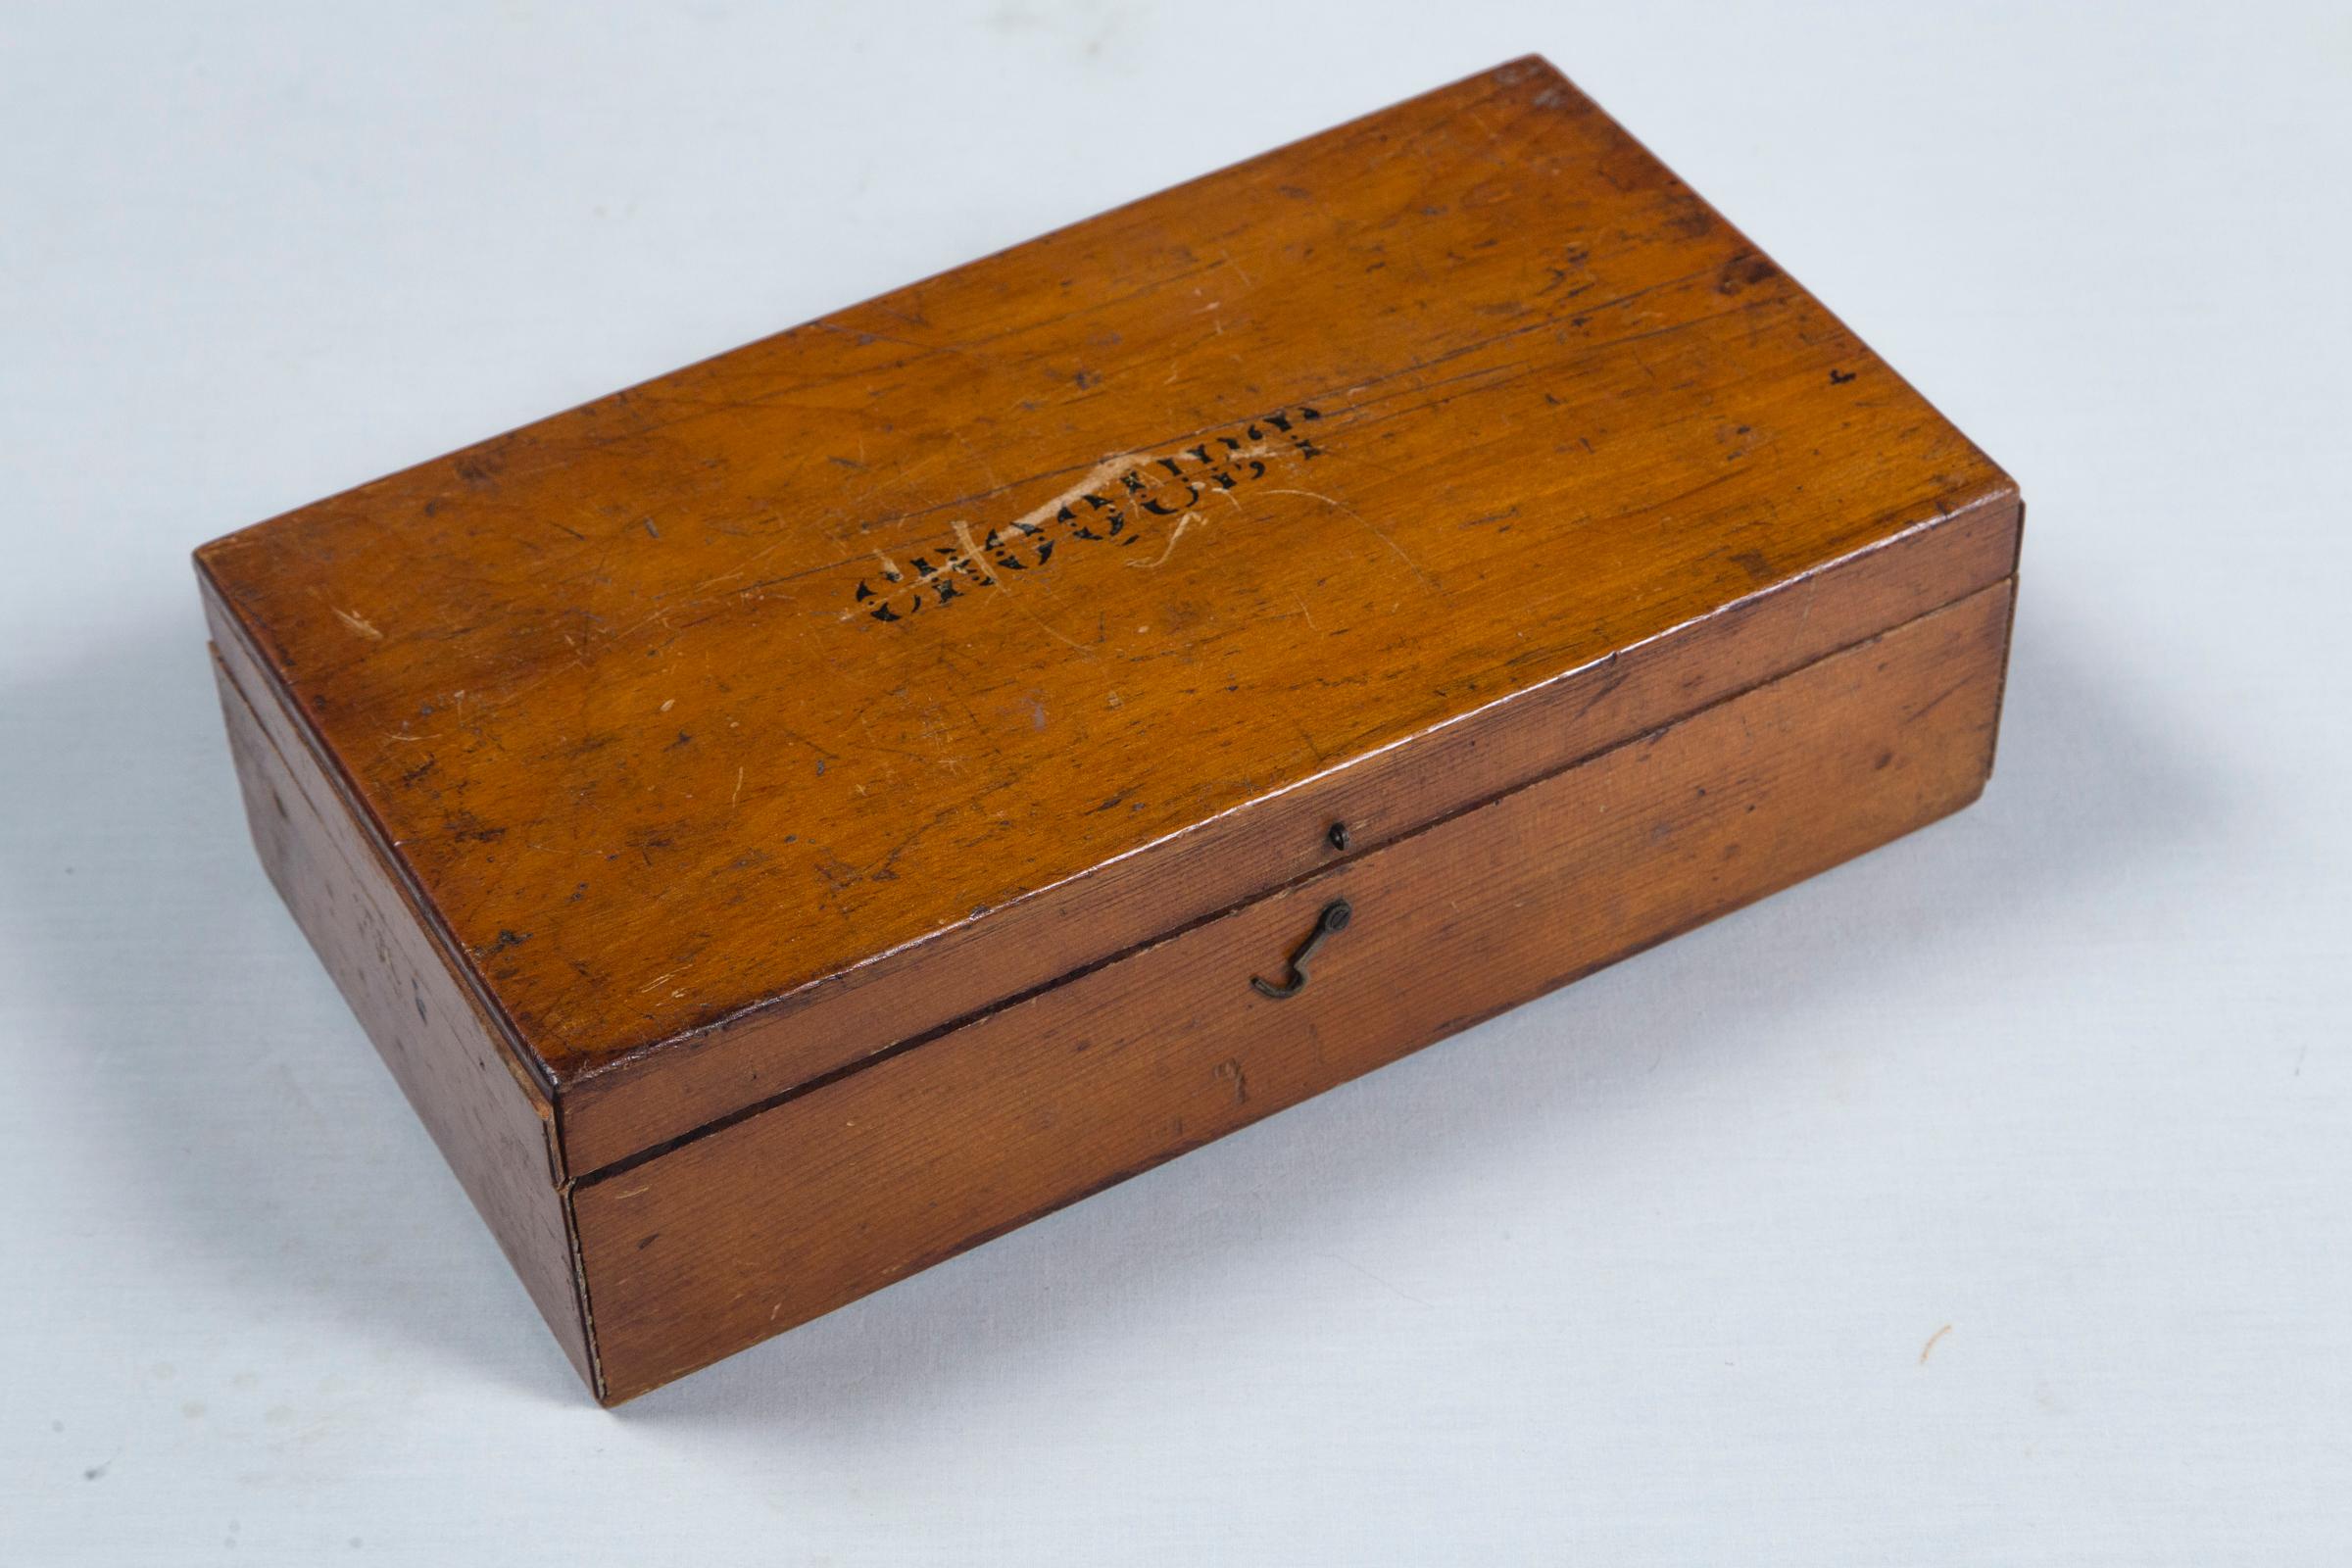 Metal Antique Mini Croquet Set with Wooden Box